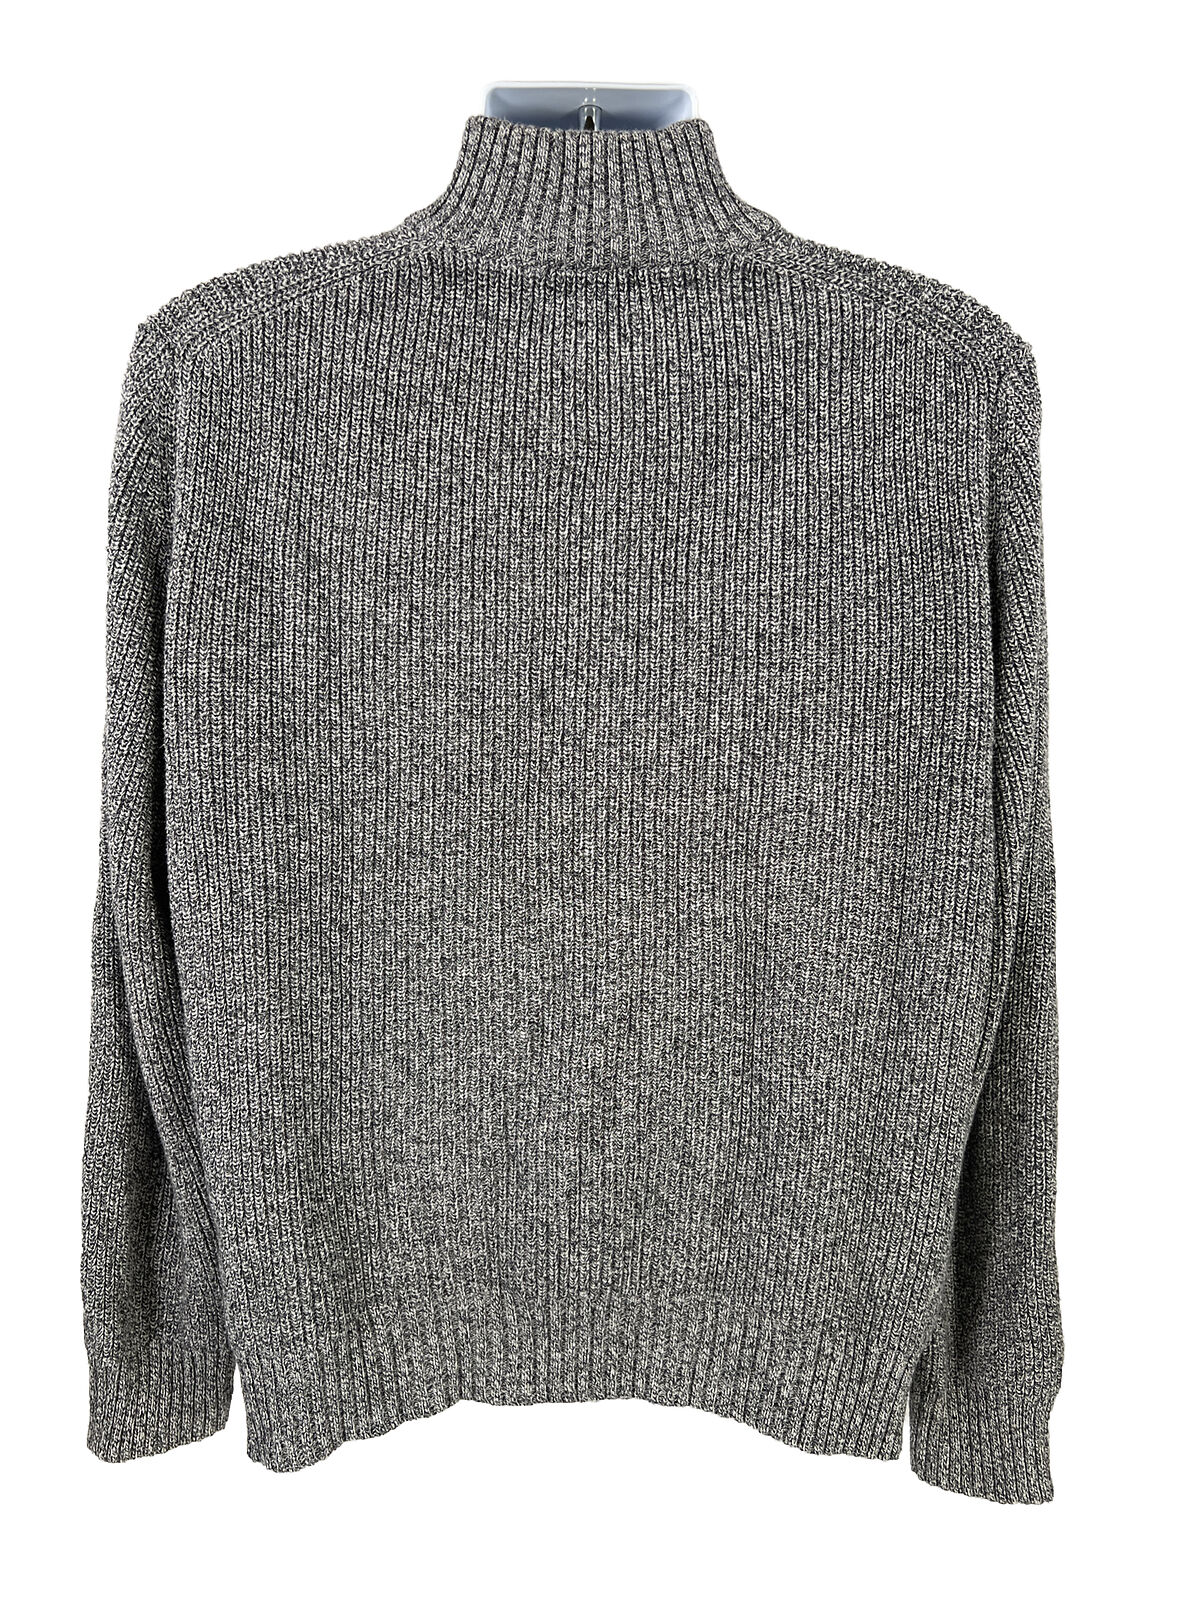 Calvin Klein Men's Gray Cotton Knit 1/4 Zip Sweater - L